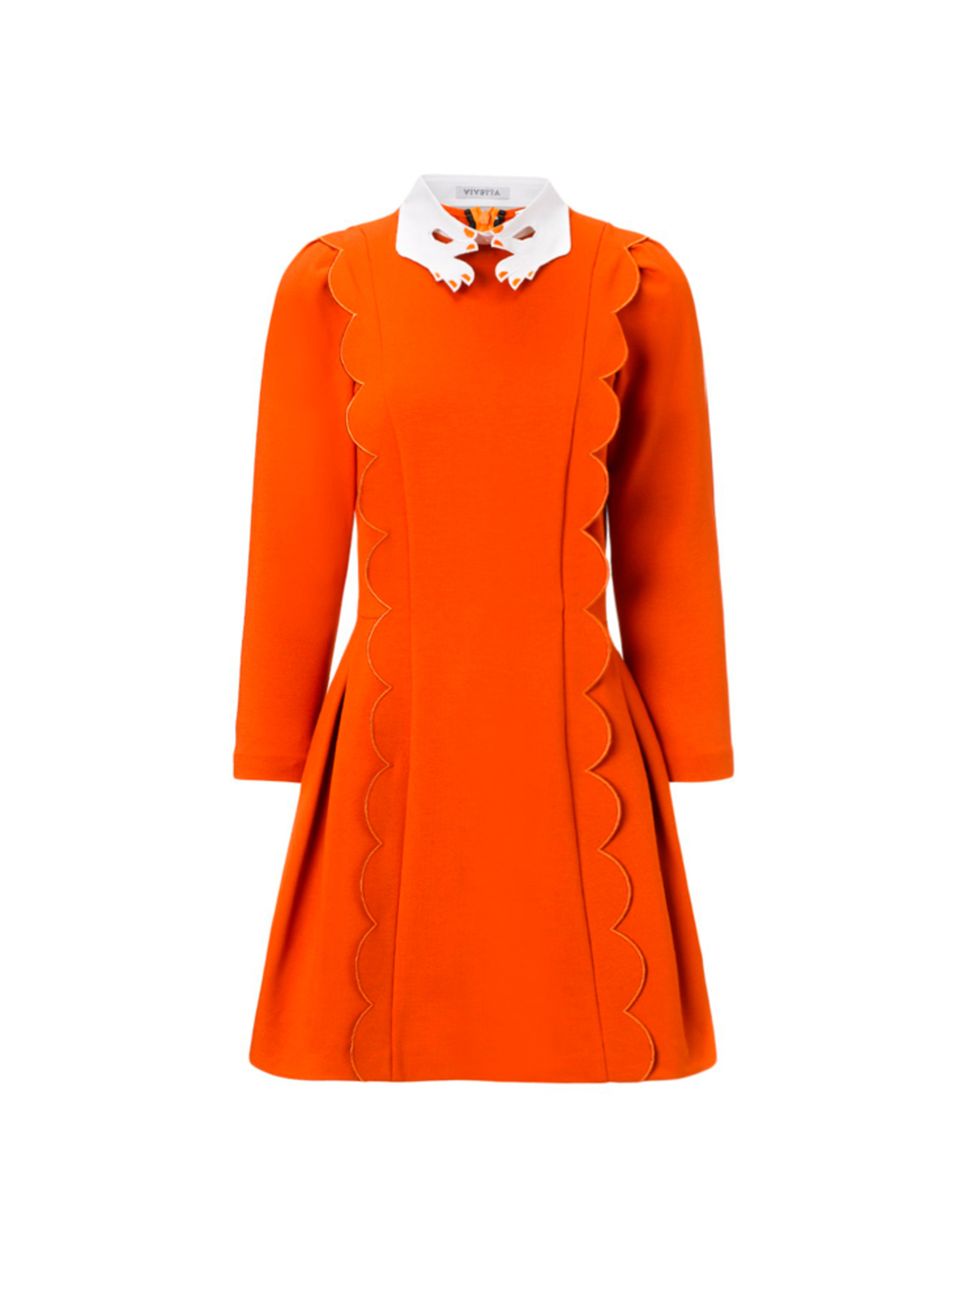 <p>Vivetta dress, £285, from <a href="http://www.avenue32.com/orange-scalloped-martedi-dress-63701/" target="_blank">avenue32.com</a><br />
 </p>